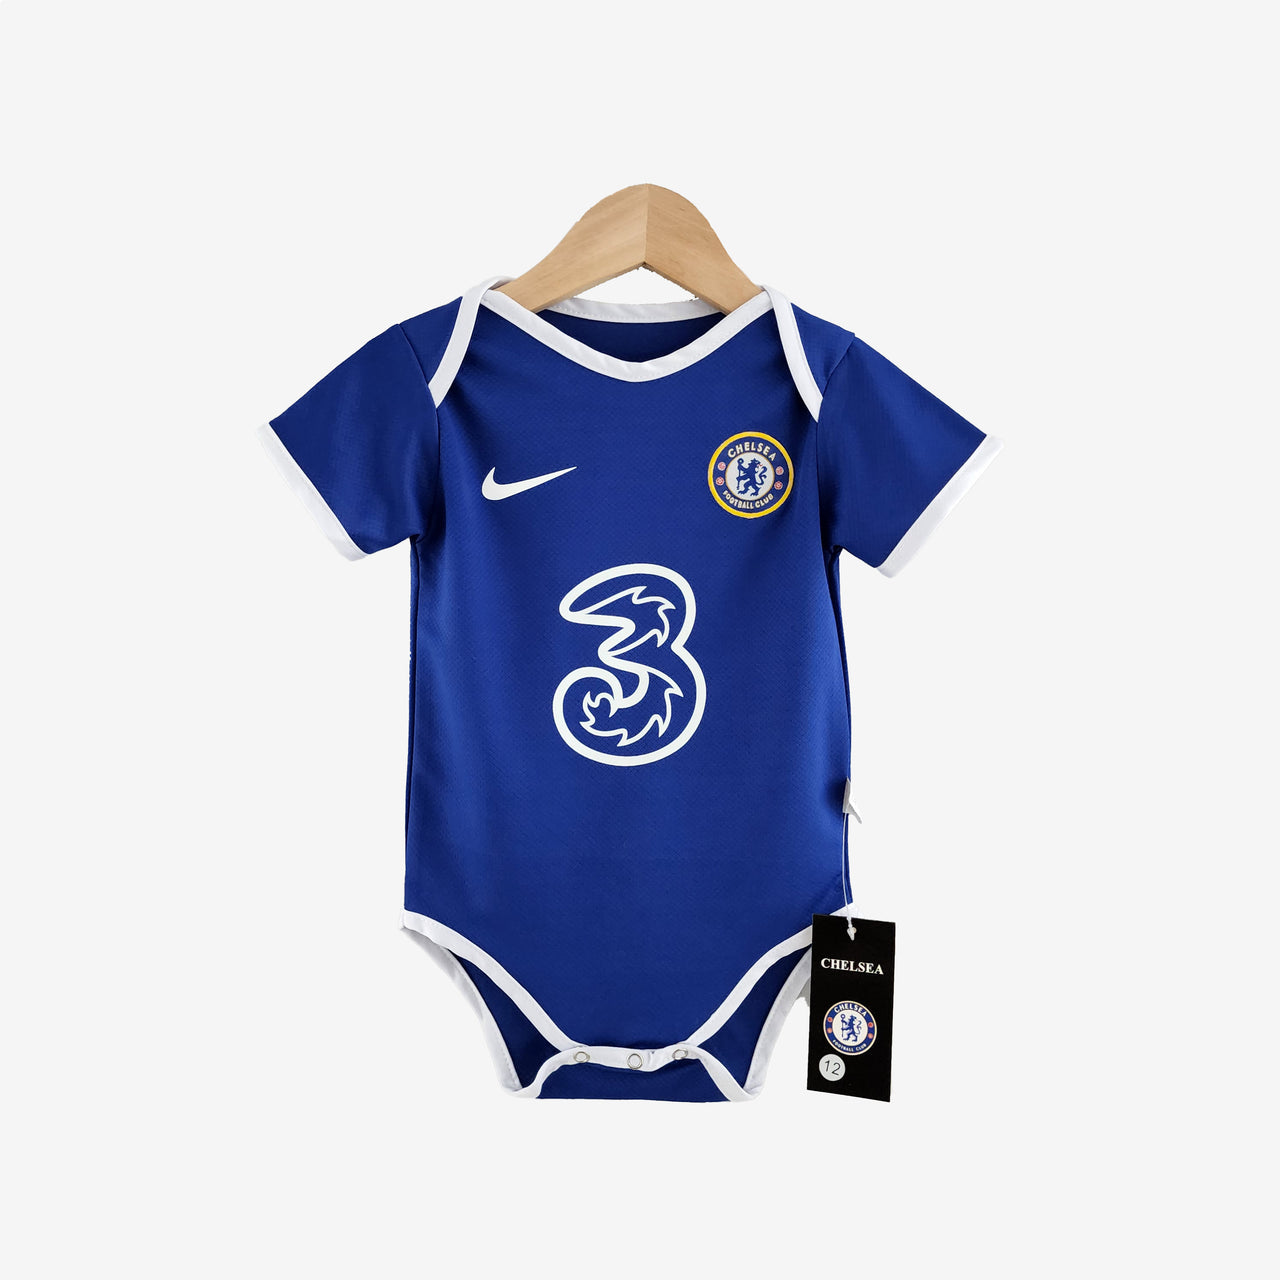 Chelsea F.C Infant Bodysuit 22/23